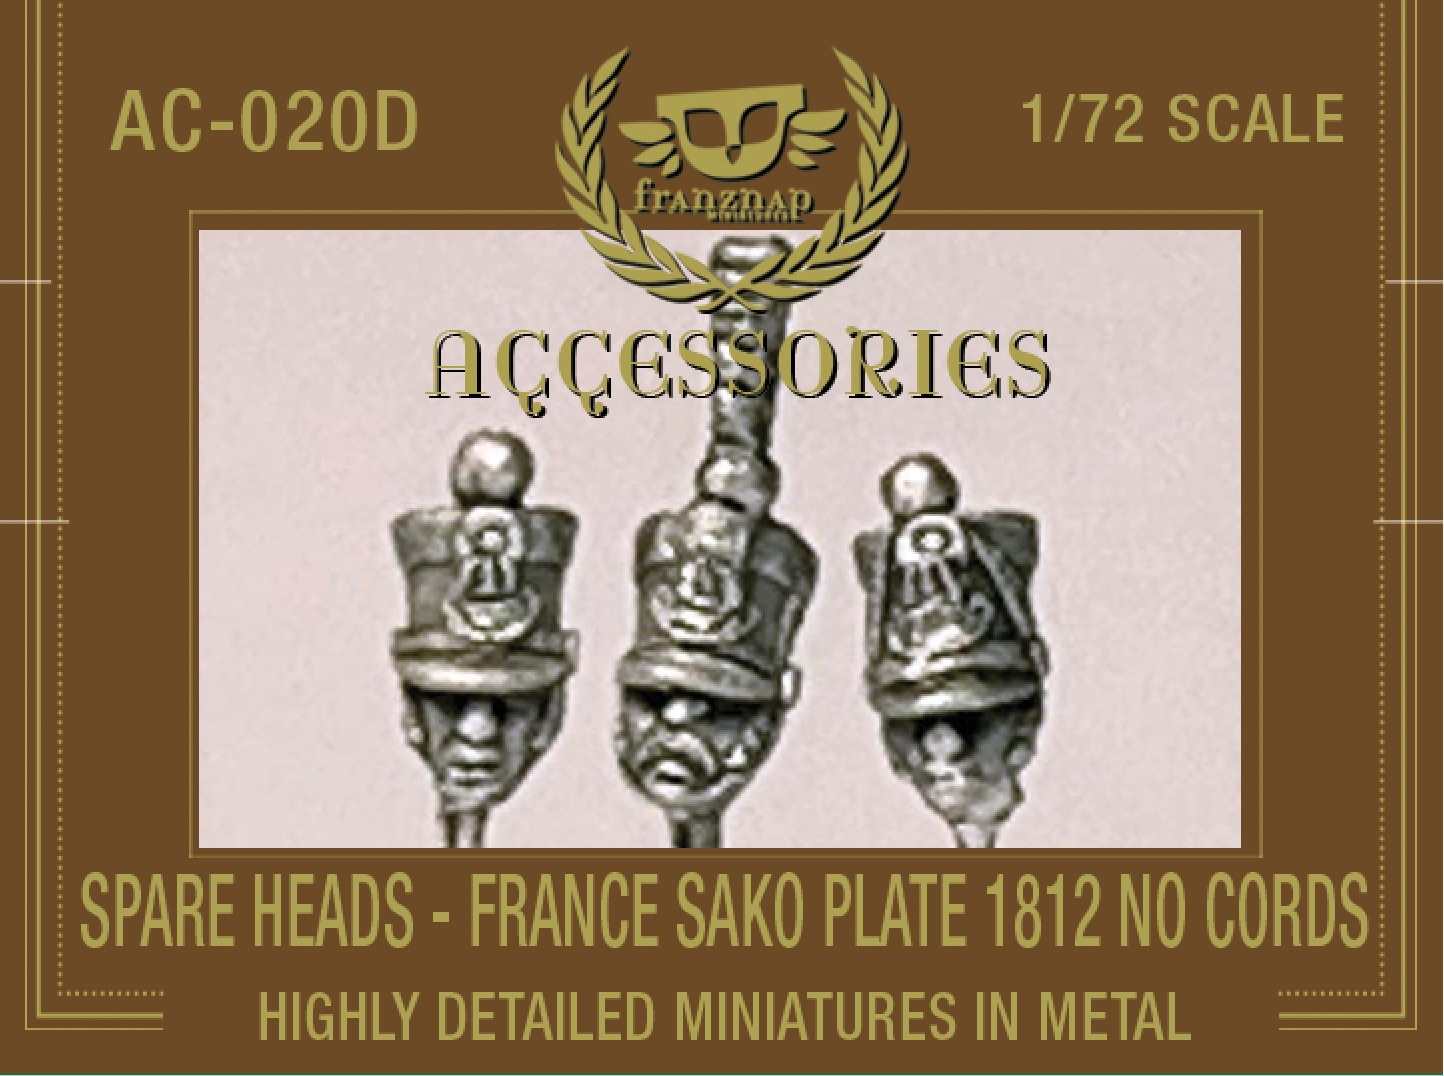 AC-020D SPARE HEADS France Sakos plate 1812 no cords